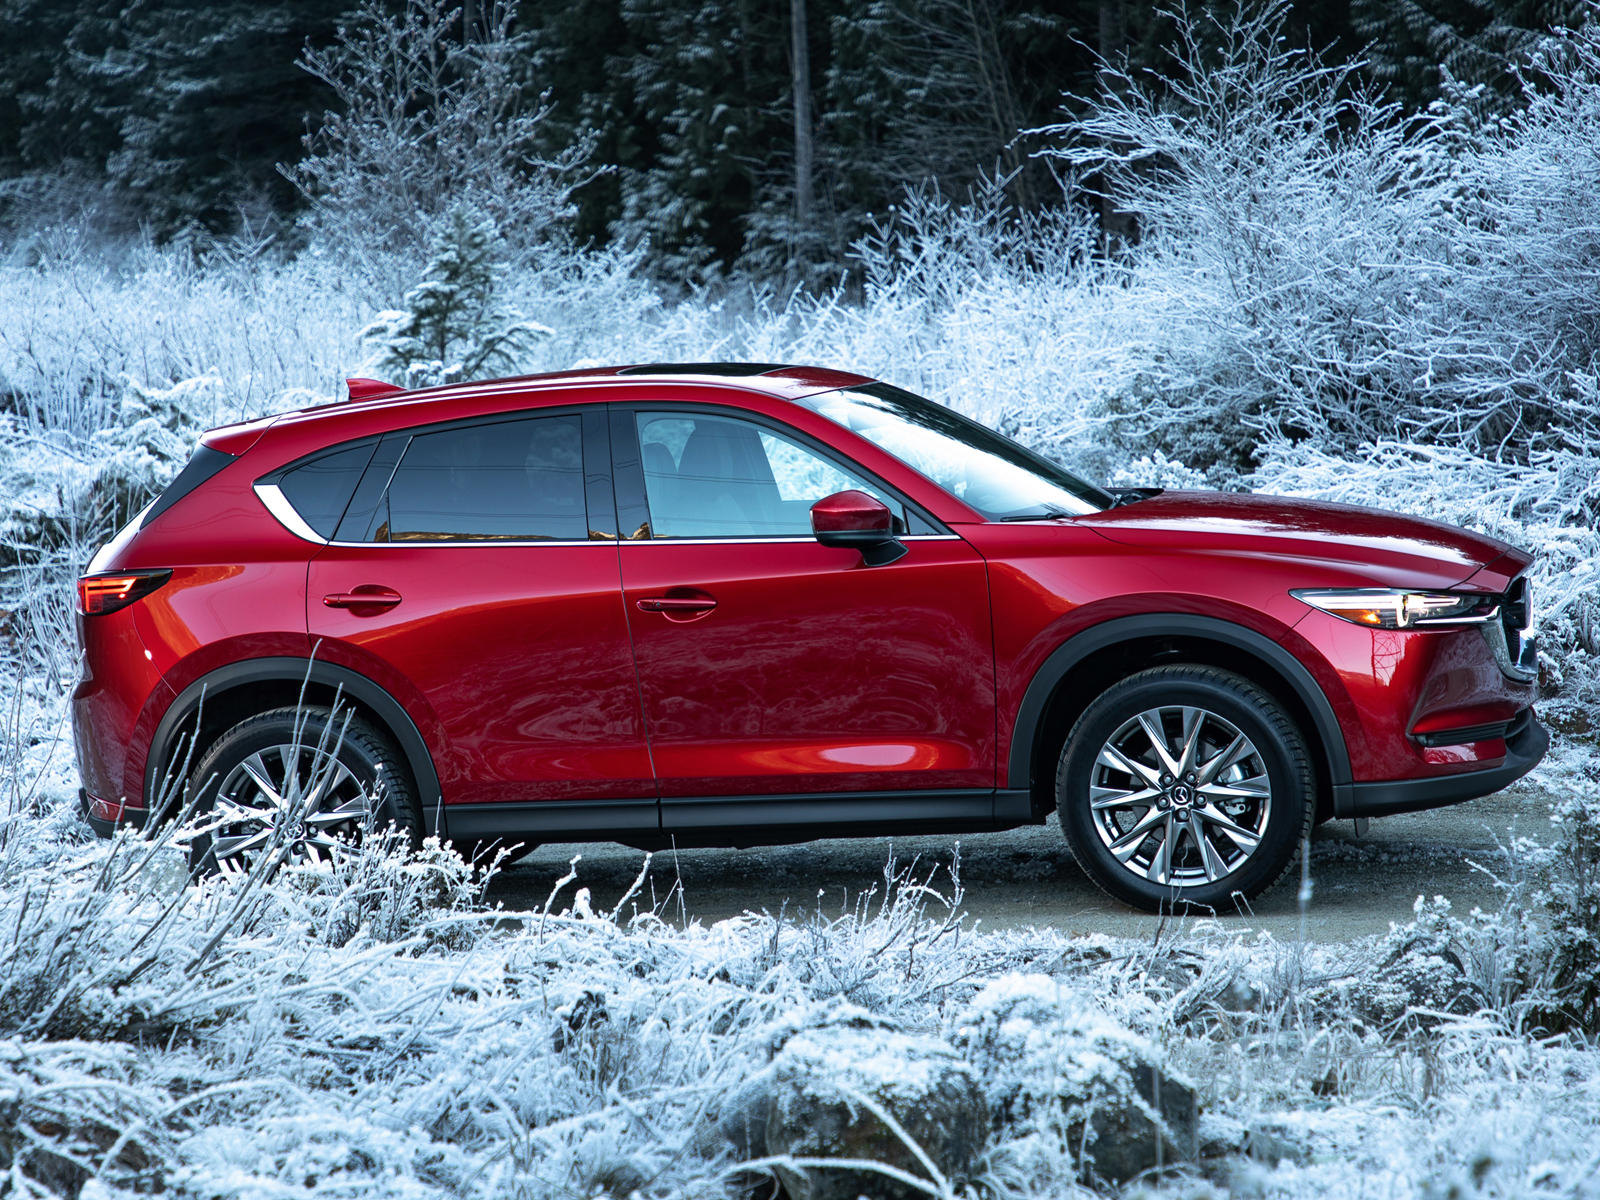 2018 Mazda Cx 5 Review Trims Specs Price New Interior Features